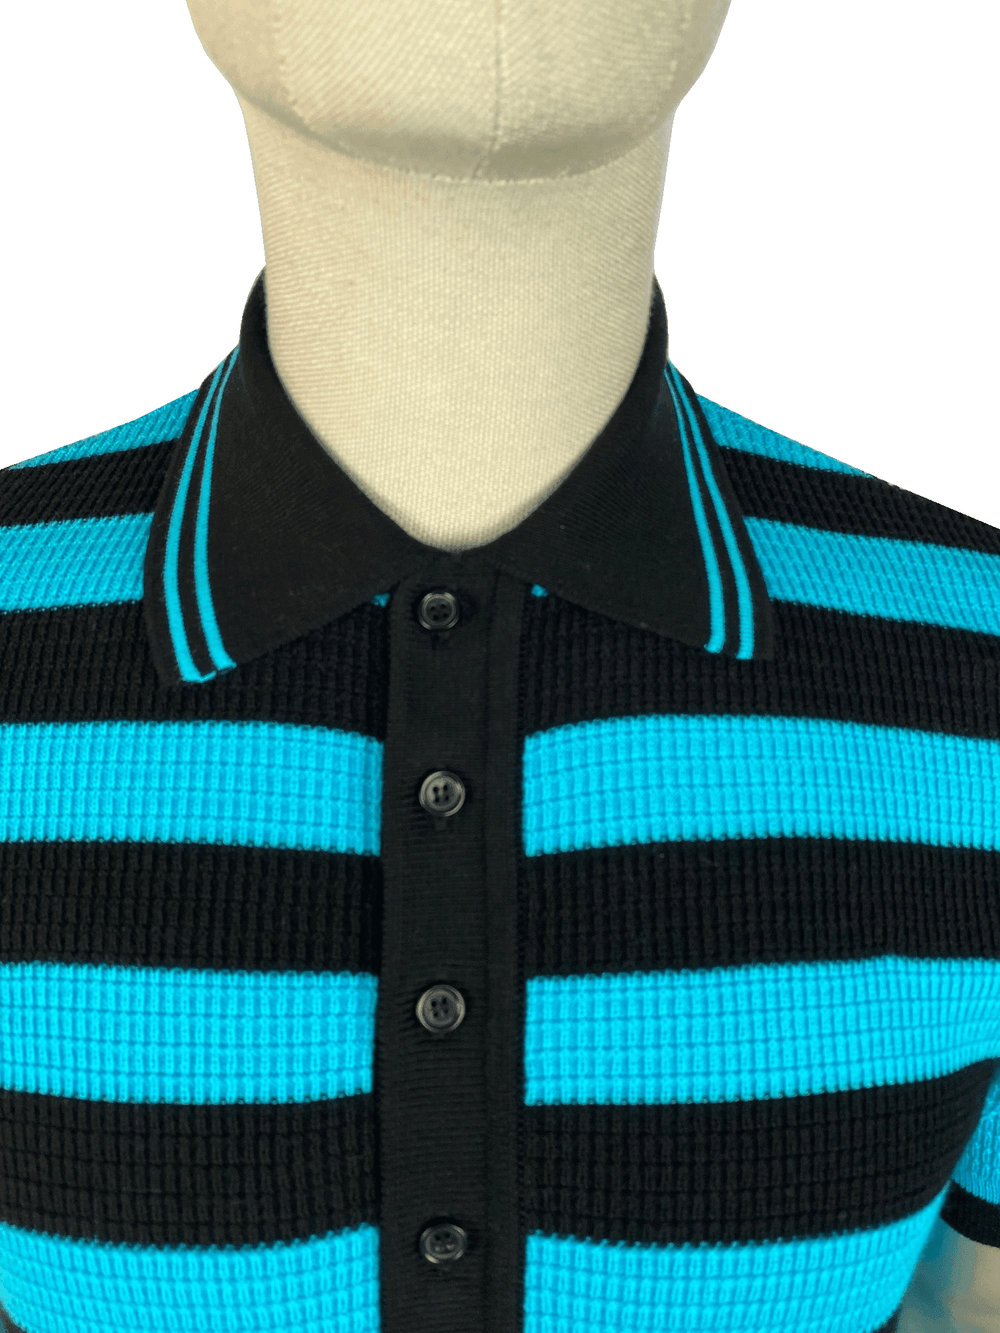 Ska & Soul "Hall" Stripe Knitted Polo Turquoise - Urban Menswear